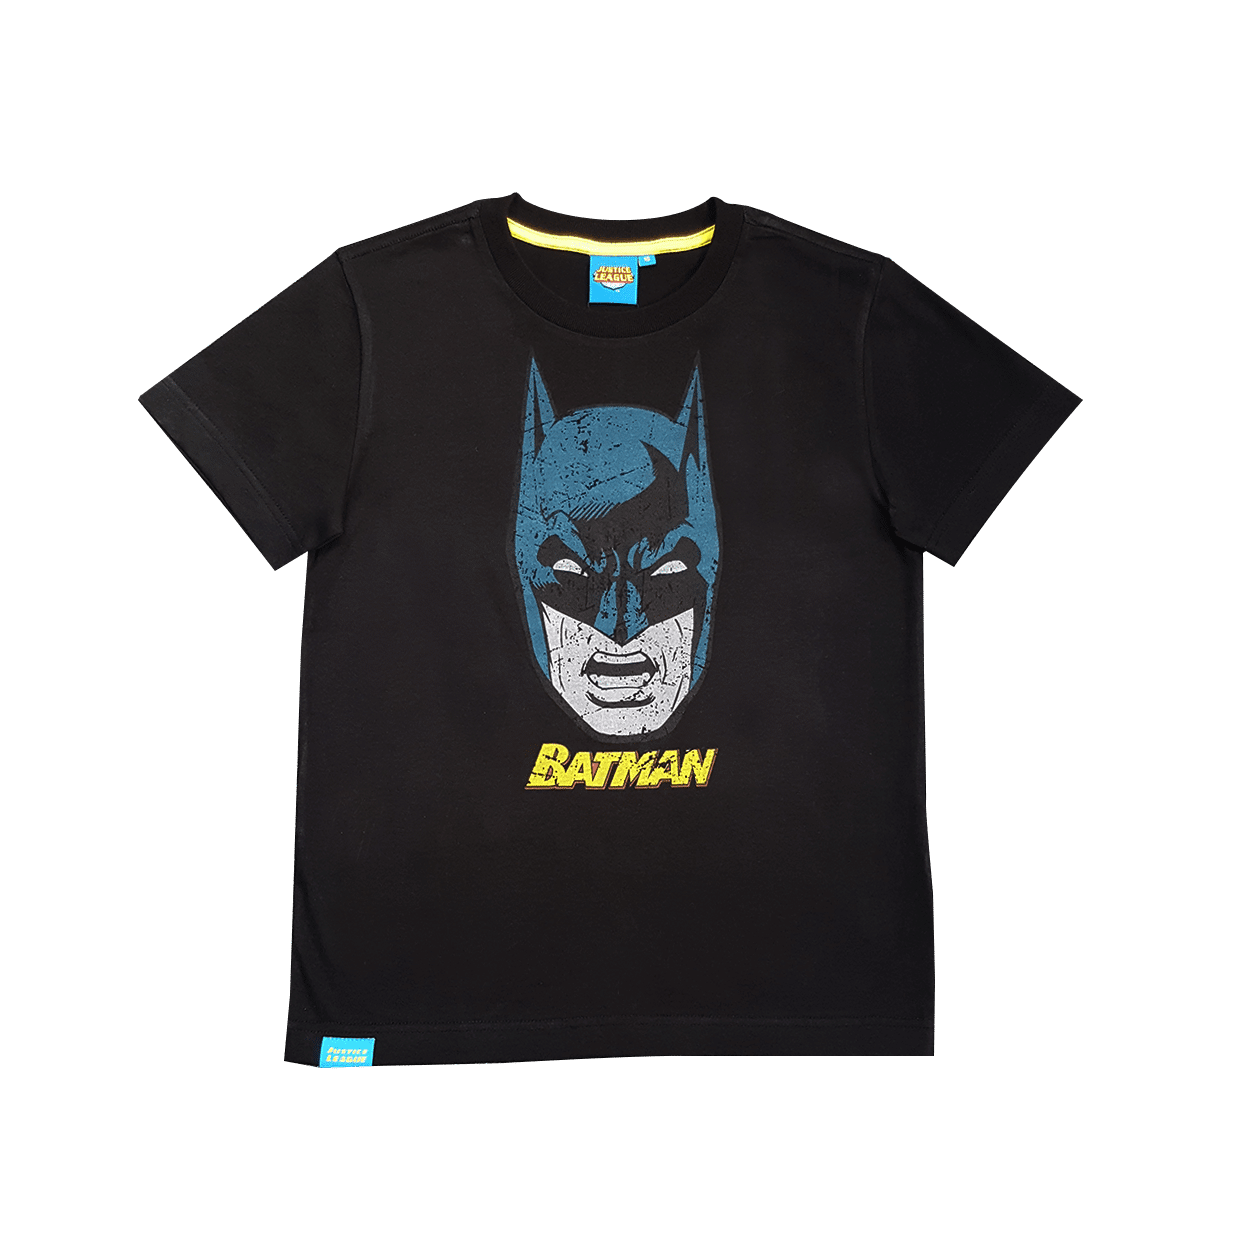 R/N I SENSE S/S Batman T-Shirt Kids Graphic COMMON